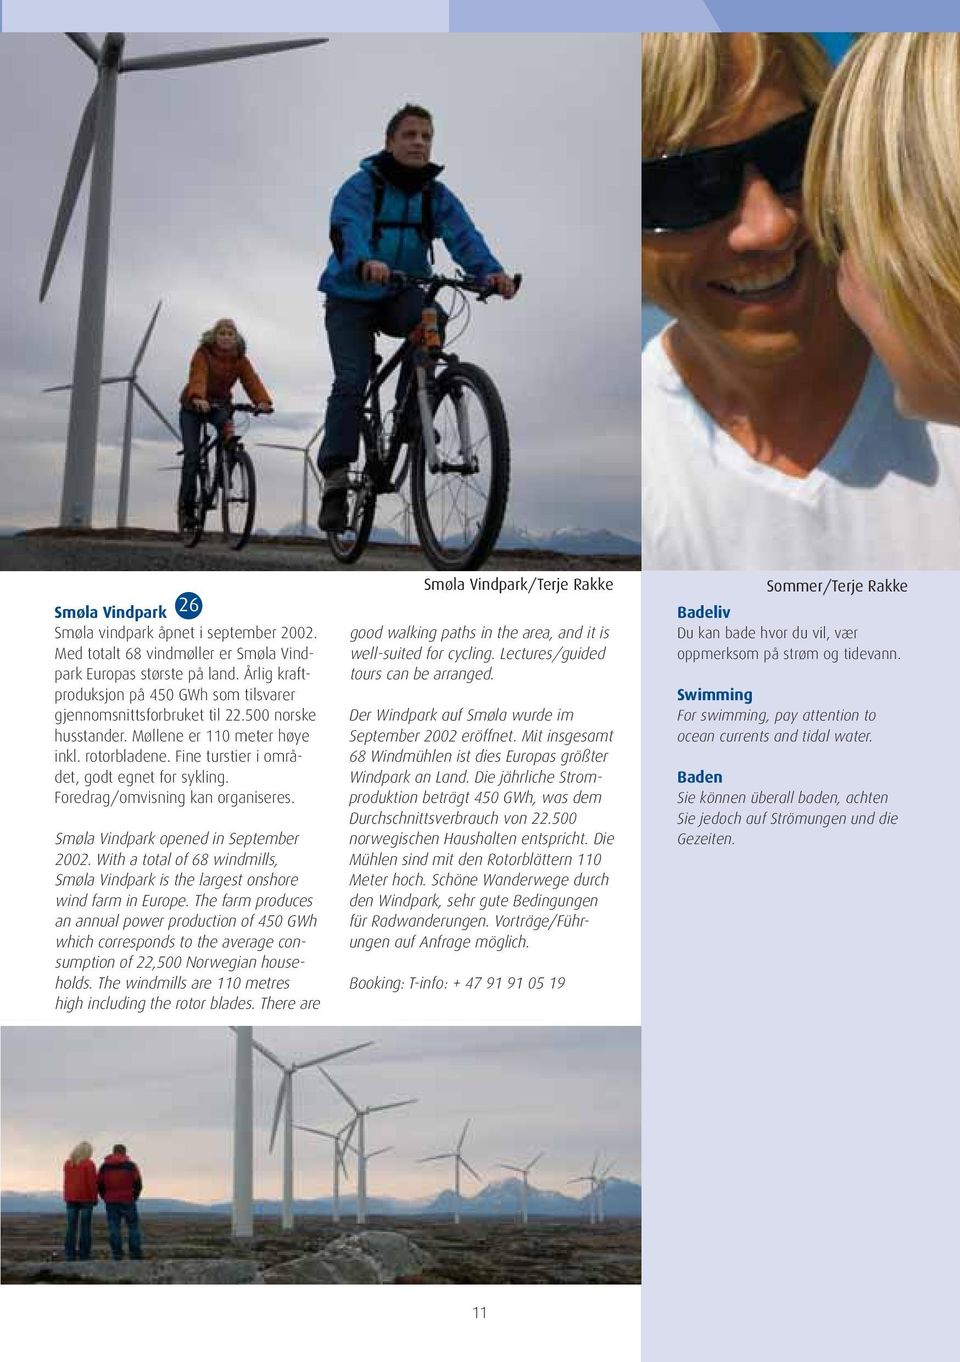 Foredrag/omvisning kan organiseres. Smøla Vindpark opened in September 2002. With a total of 68 windmills, Smøla Vindpark is the largest onshore wind farm in Europe.